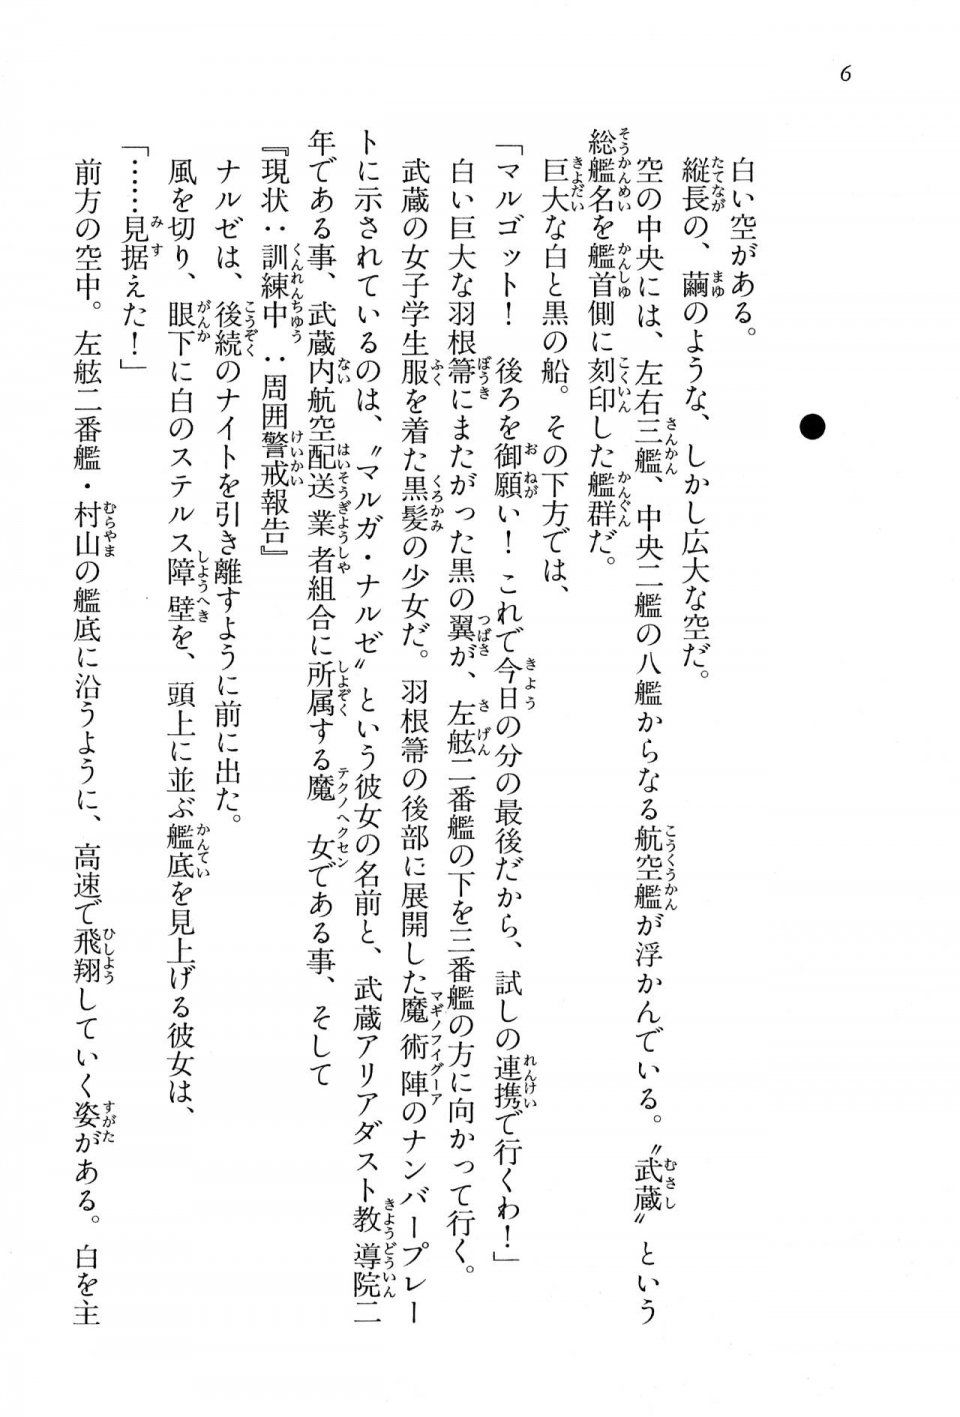 Kyoukai Senjou no Horizon BD Special Mininovel Vol 2(1B) - Photo #10